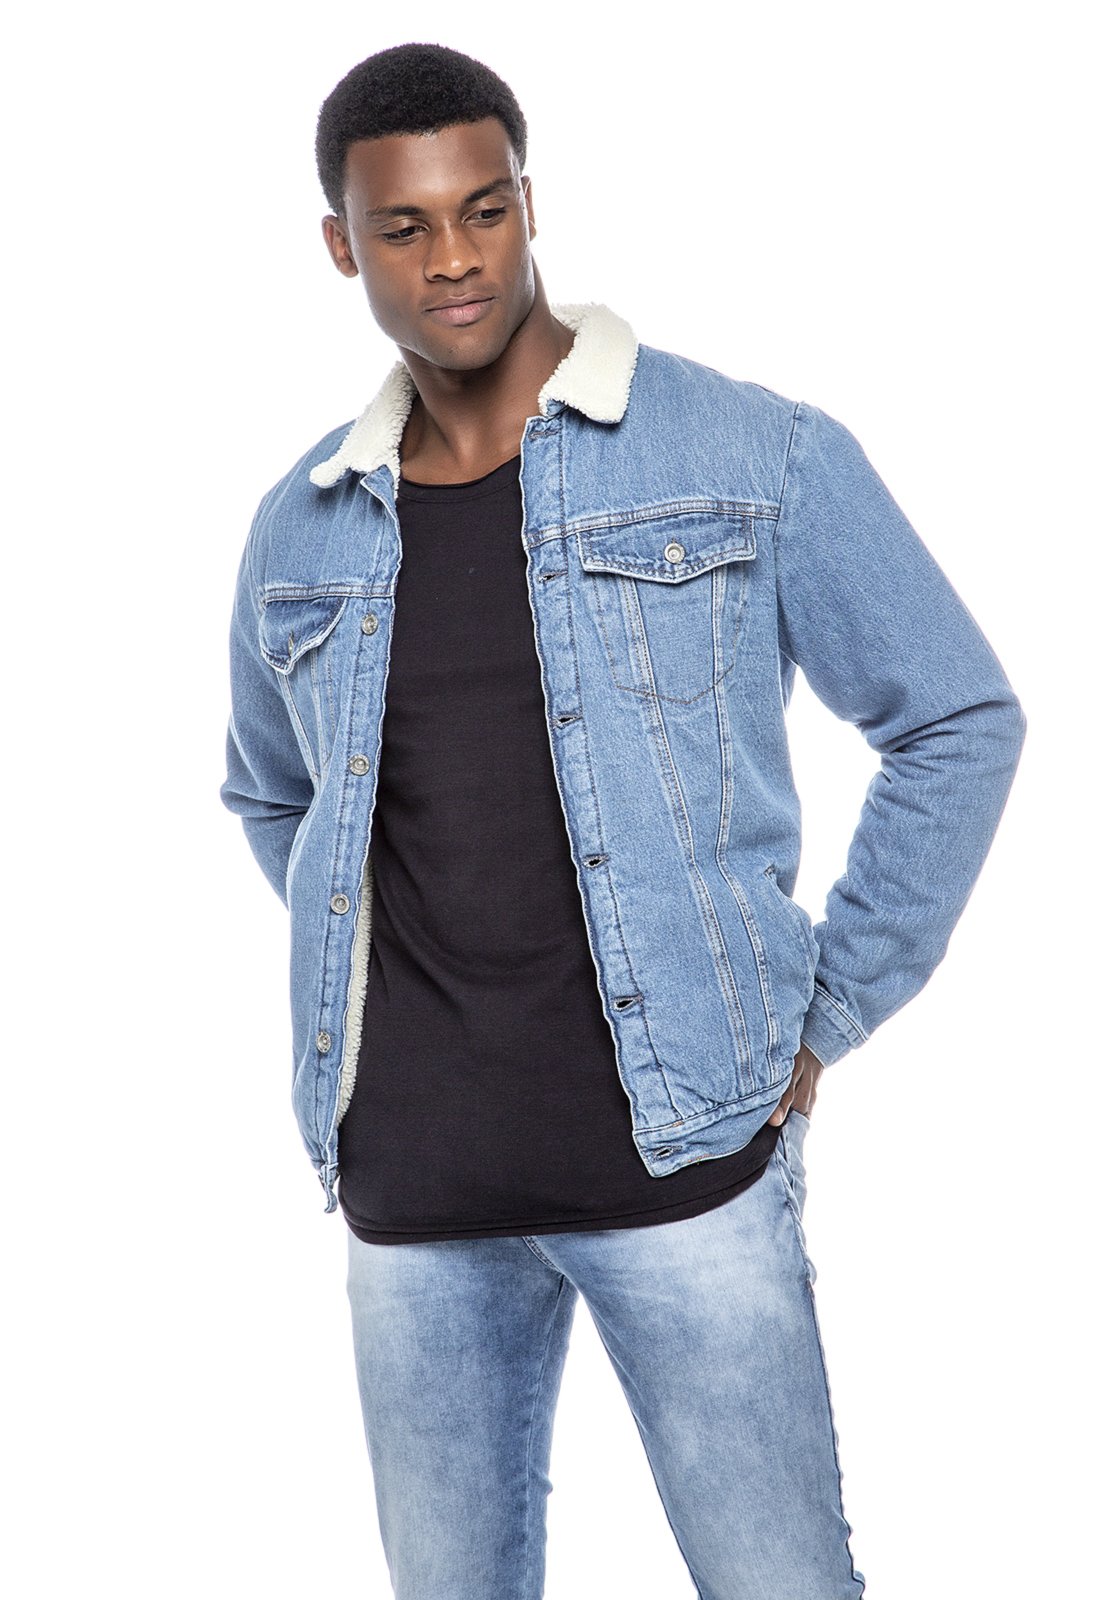 jaqueta jeans masculina grande